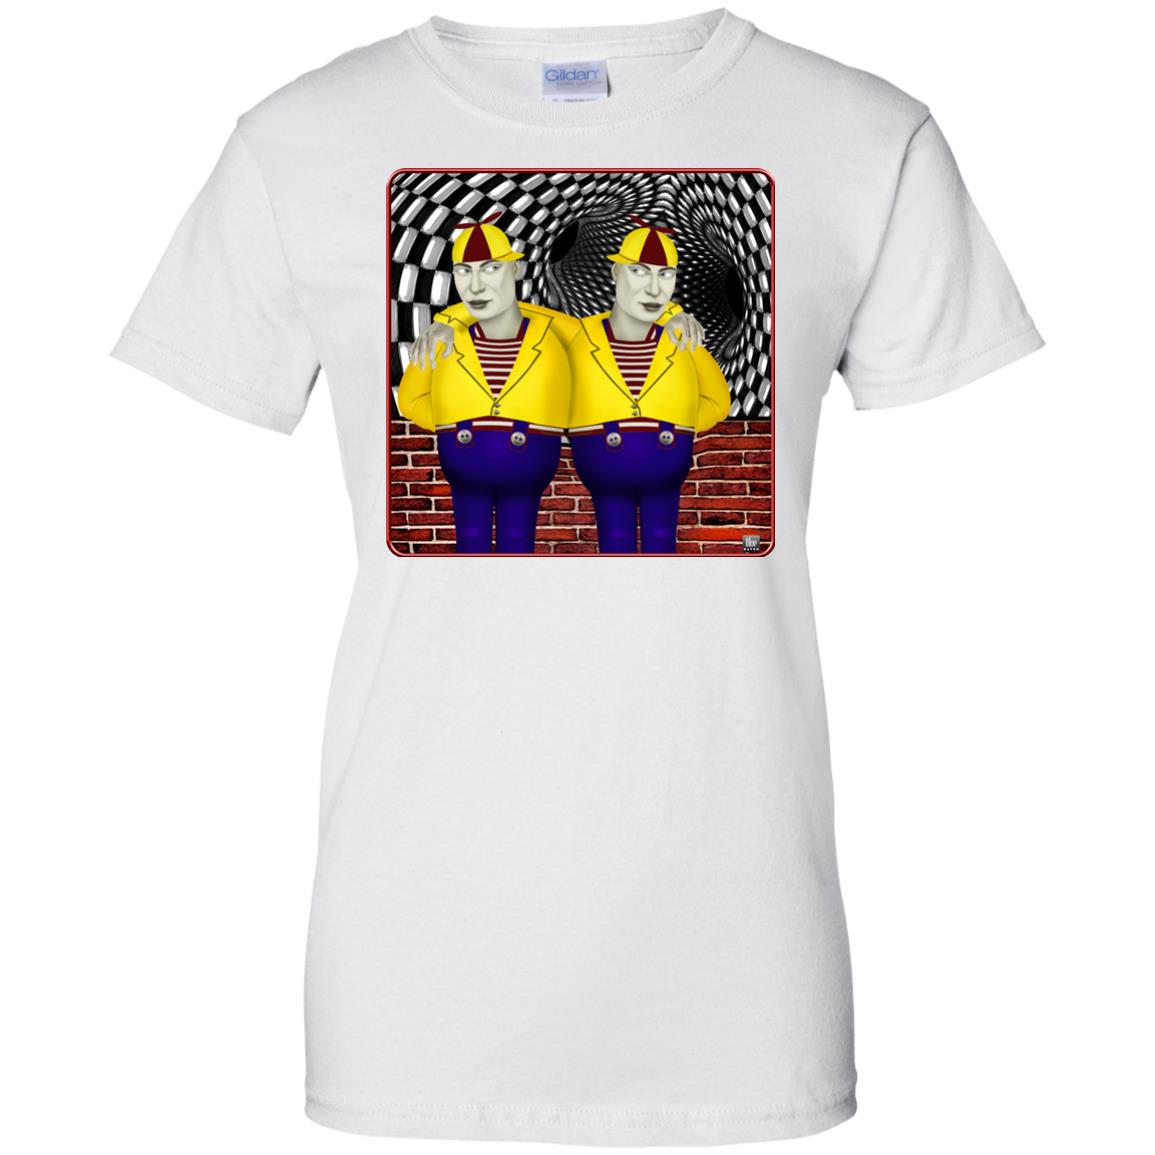 tweedledee and dum - Women's Relaxed Fit T-Shirt